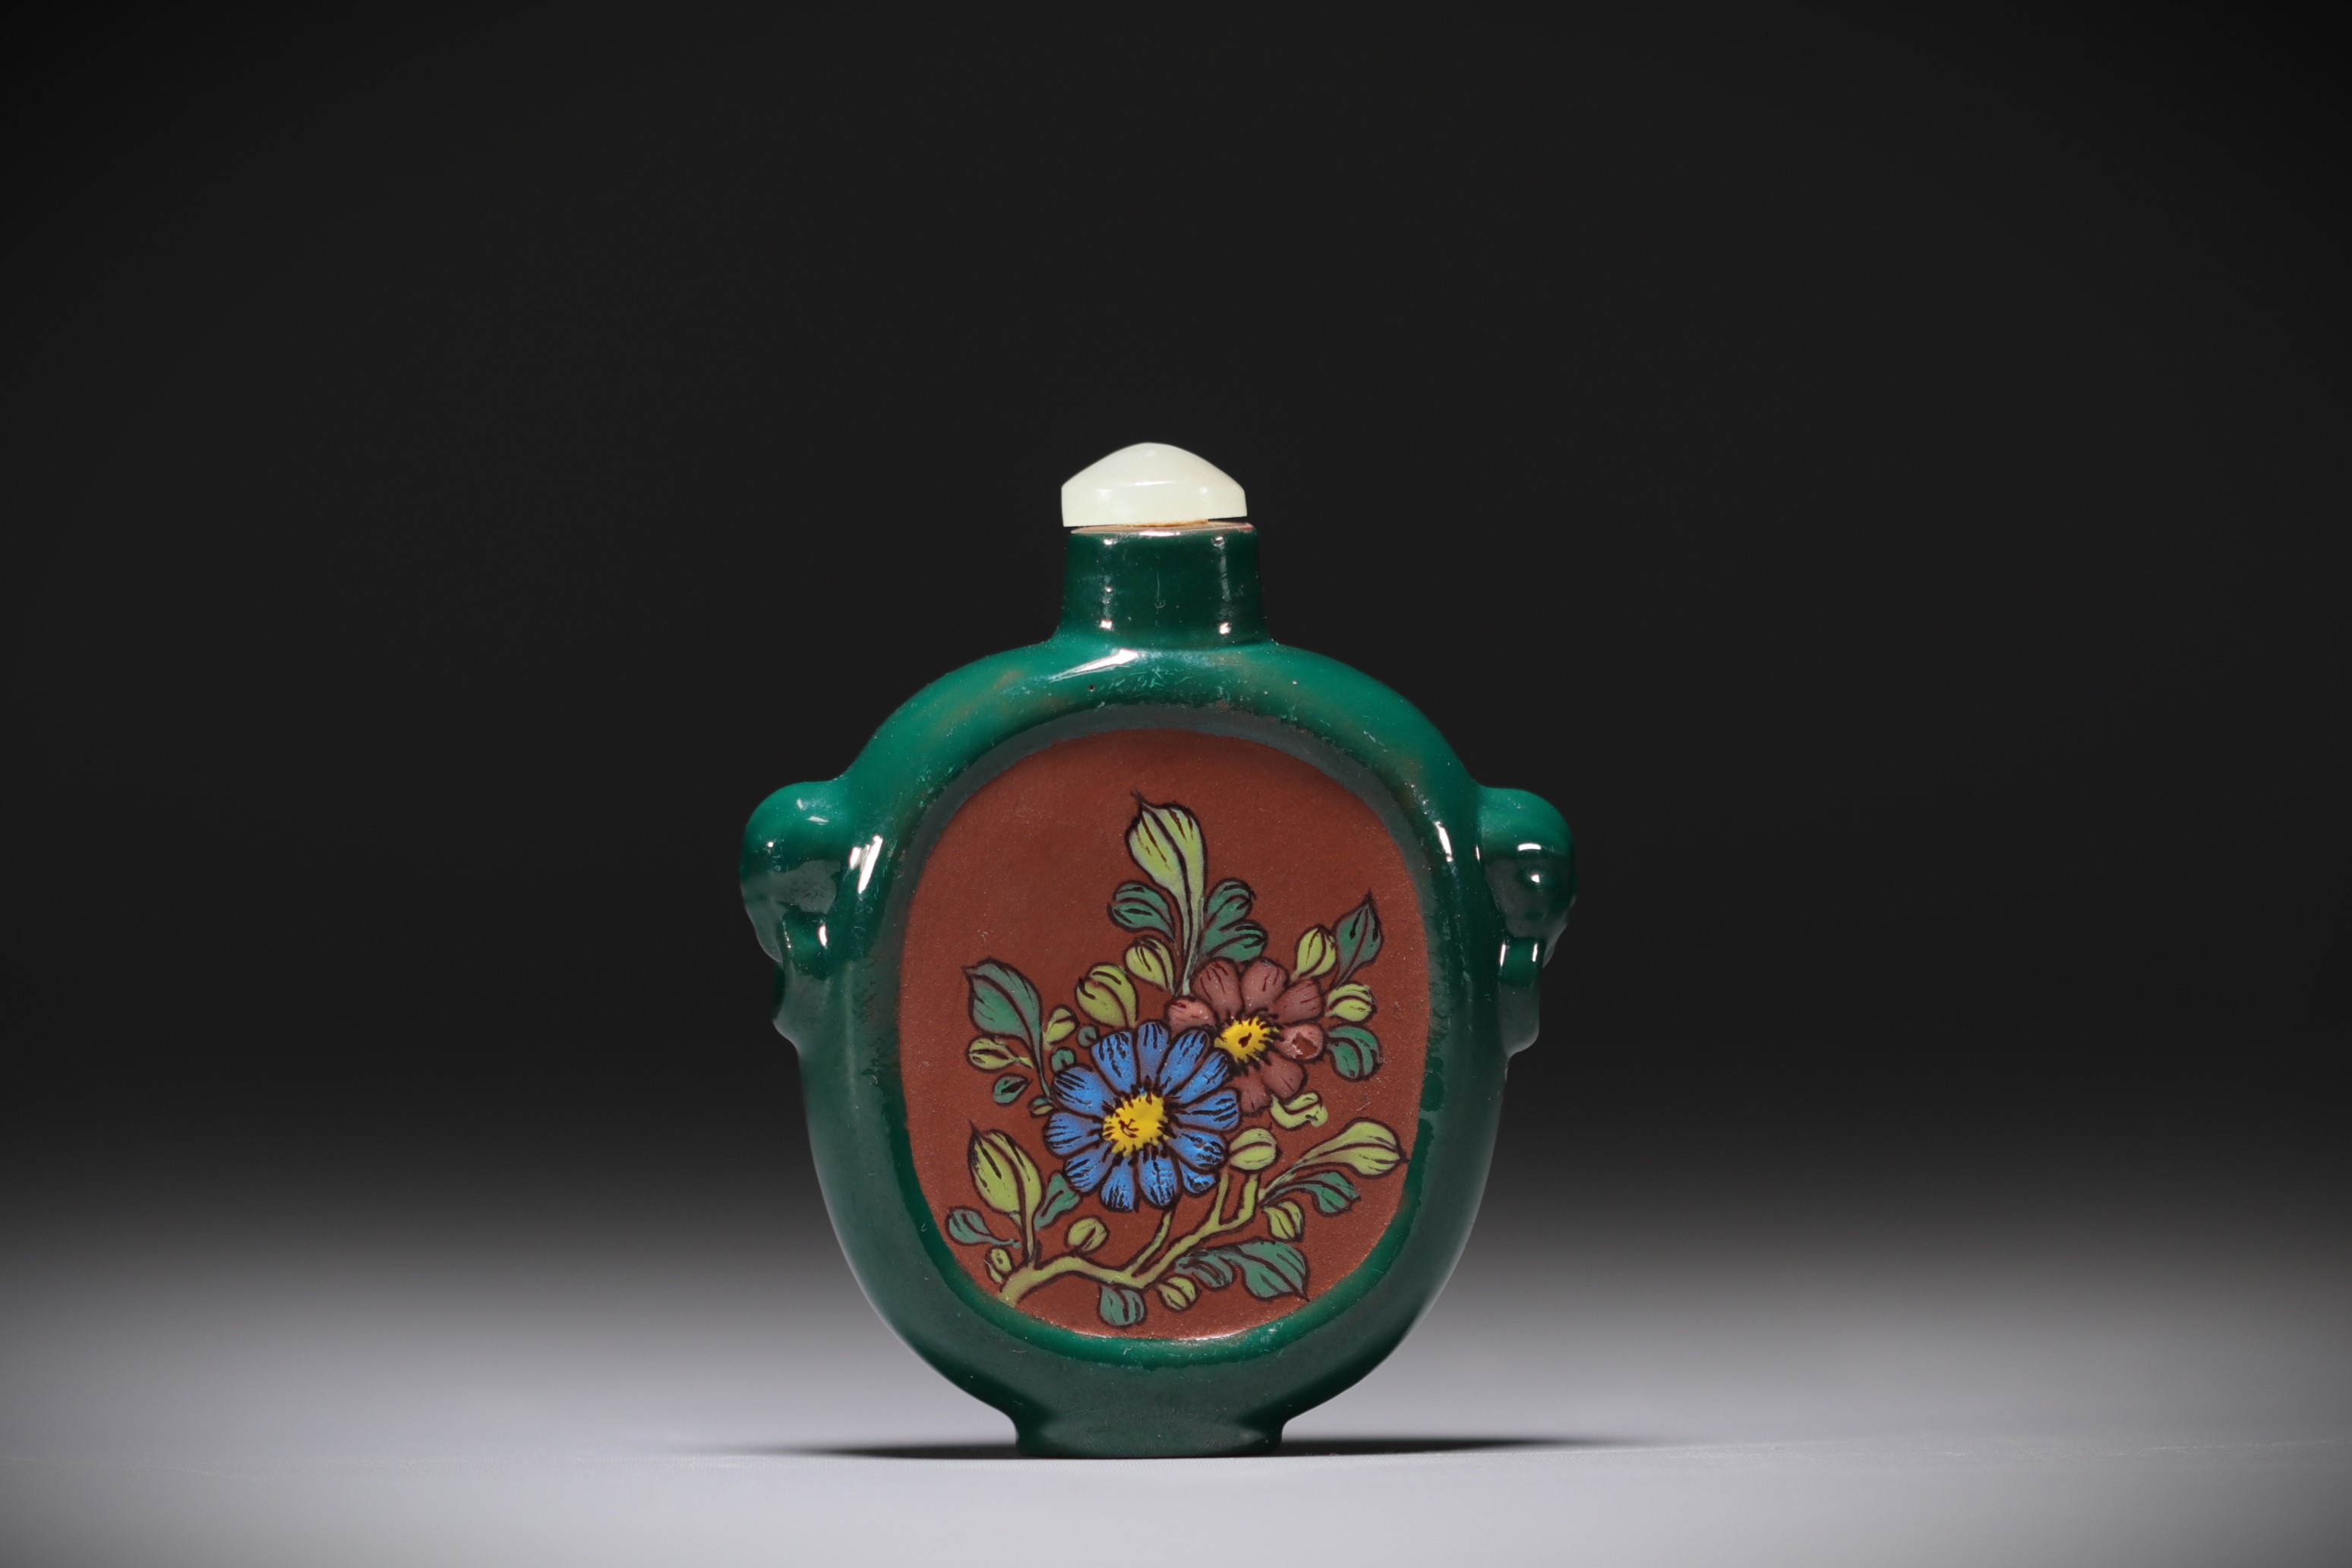 China - Ceramic snuffbox with floral decoration, circa 1900.